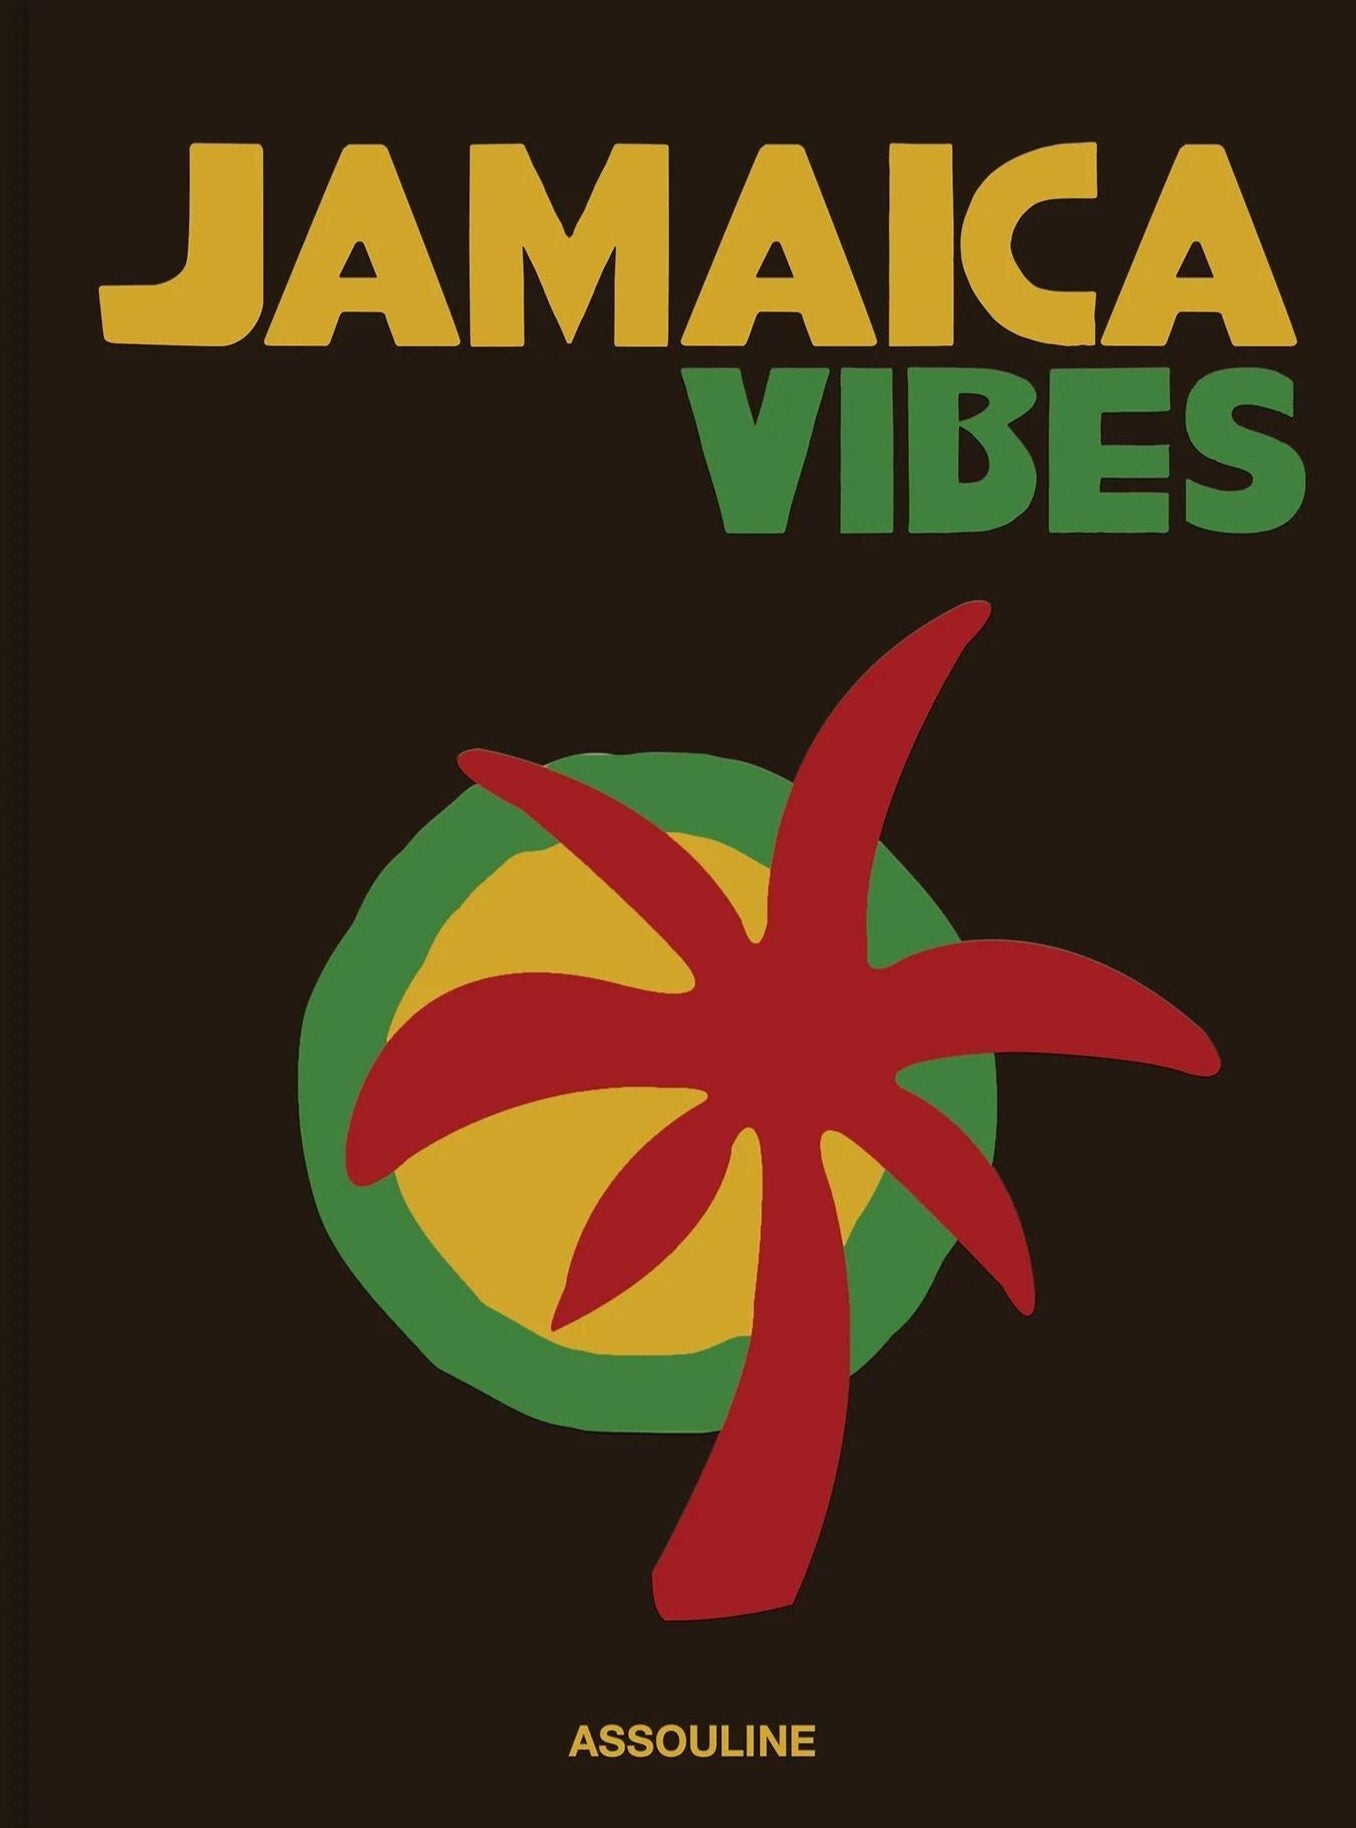 Vibras de Assouline Jamaica